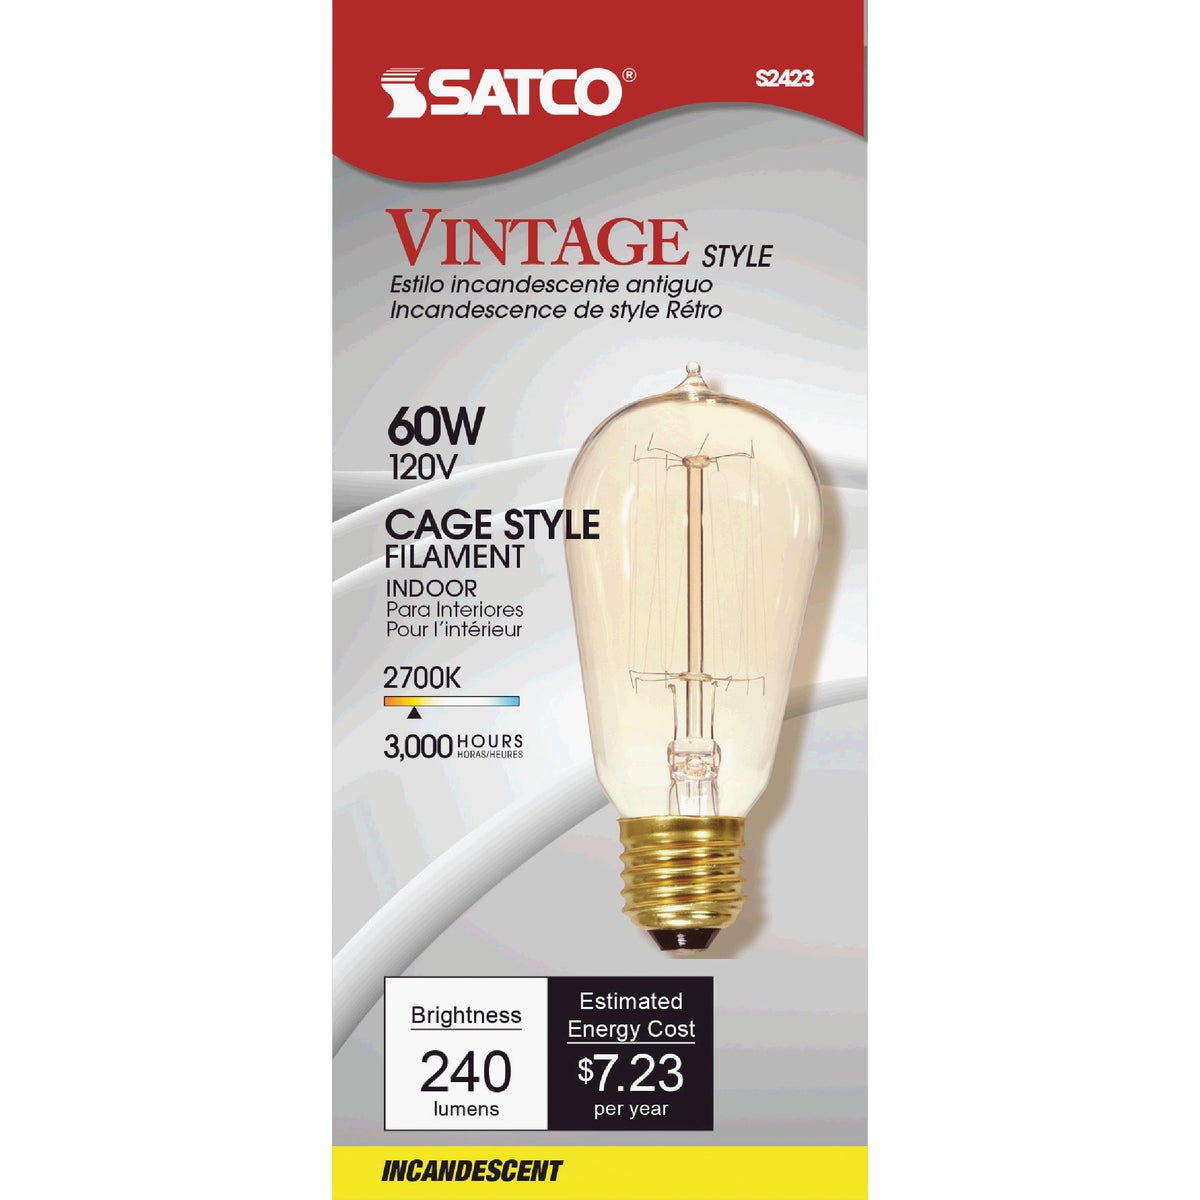 Satco 60W Clear Medium ST19 Incandescent Vintage Light Bulb